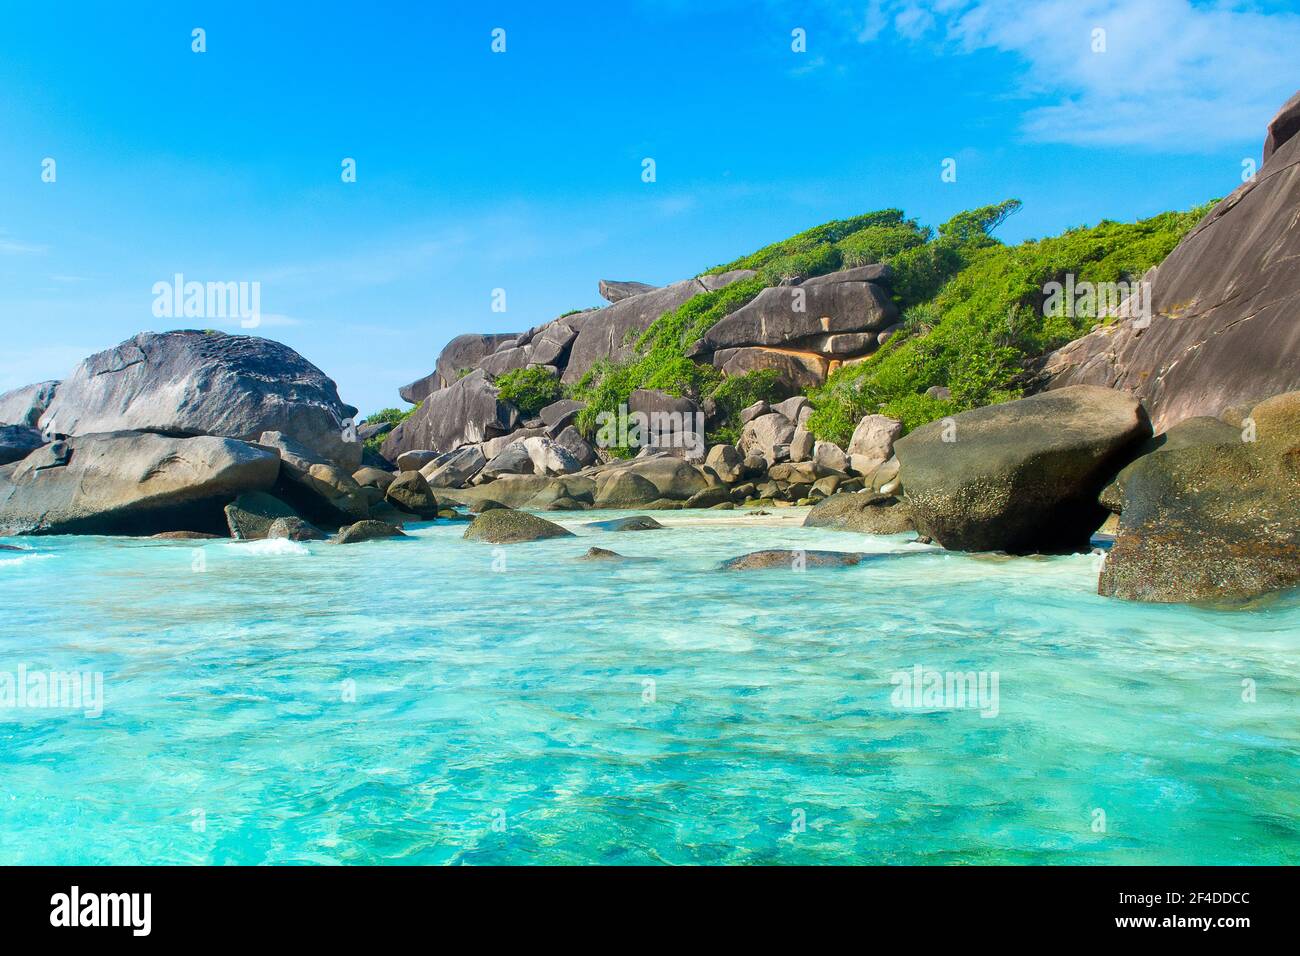 Rock in the white sandy beach - Koh Similan island, Andaman Sea, Thailand Stock Photo